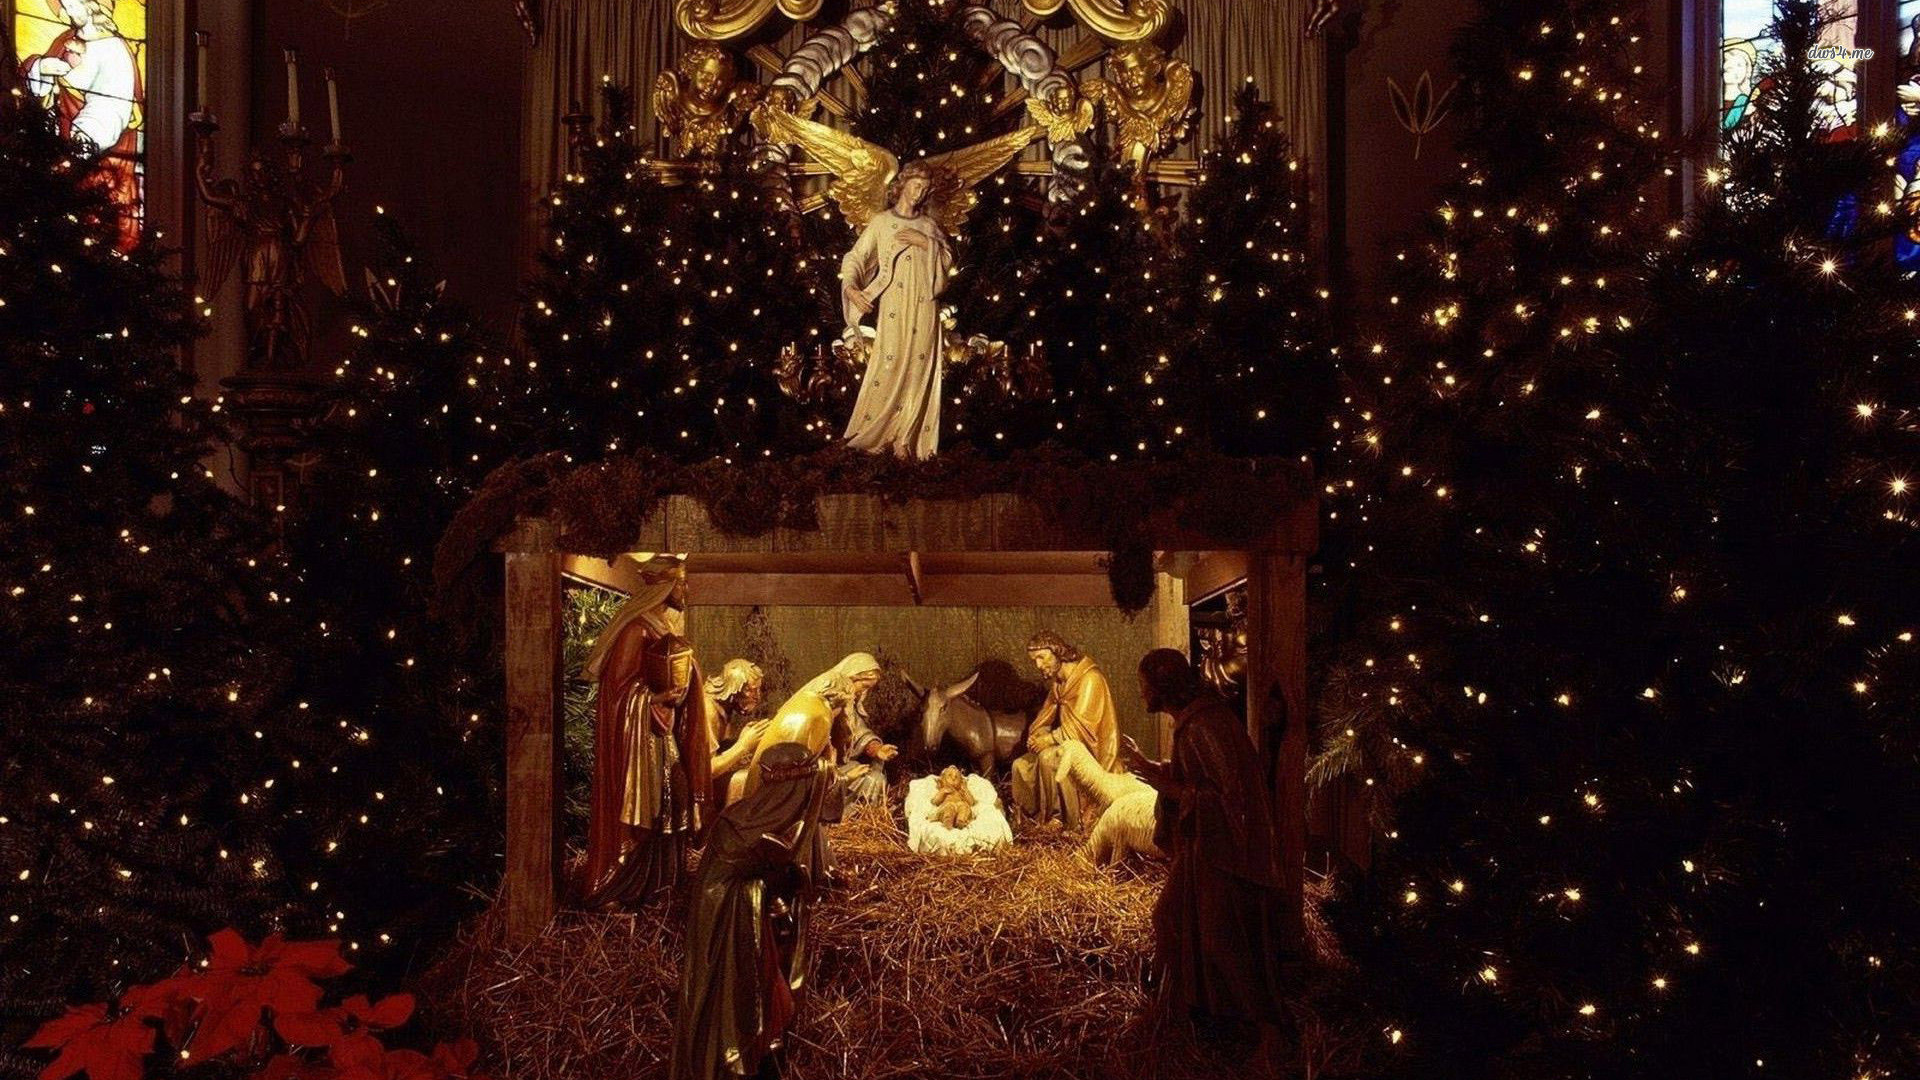 1920x1080 merry christmas nativity screensavers nativity scene desktop wallpapers 021  - Merry Christmas Nativity Scenes